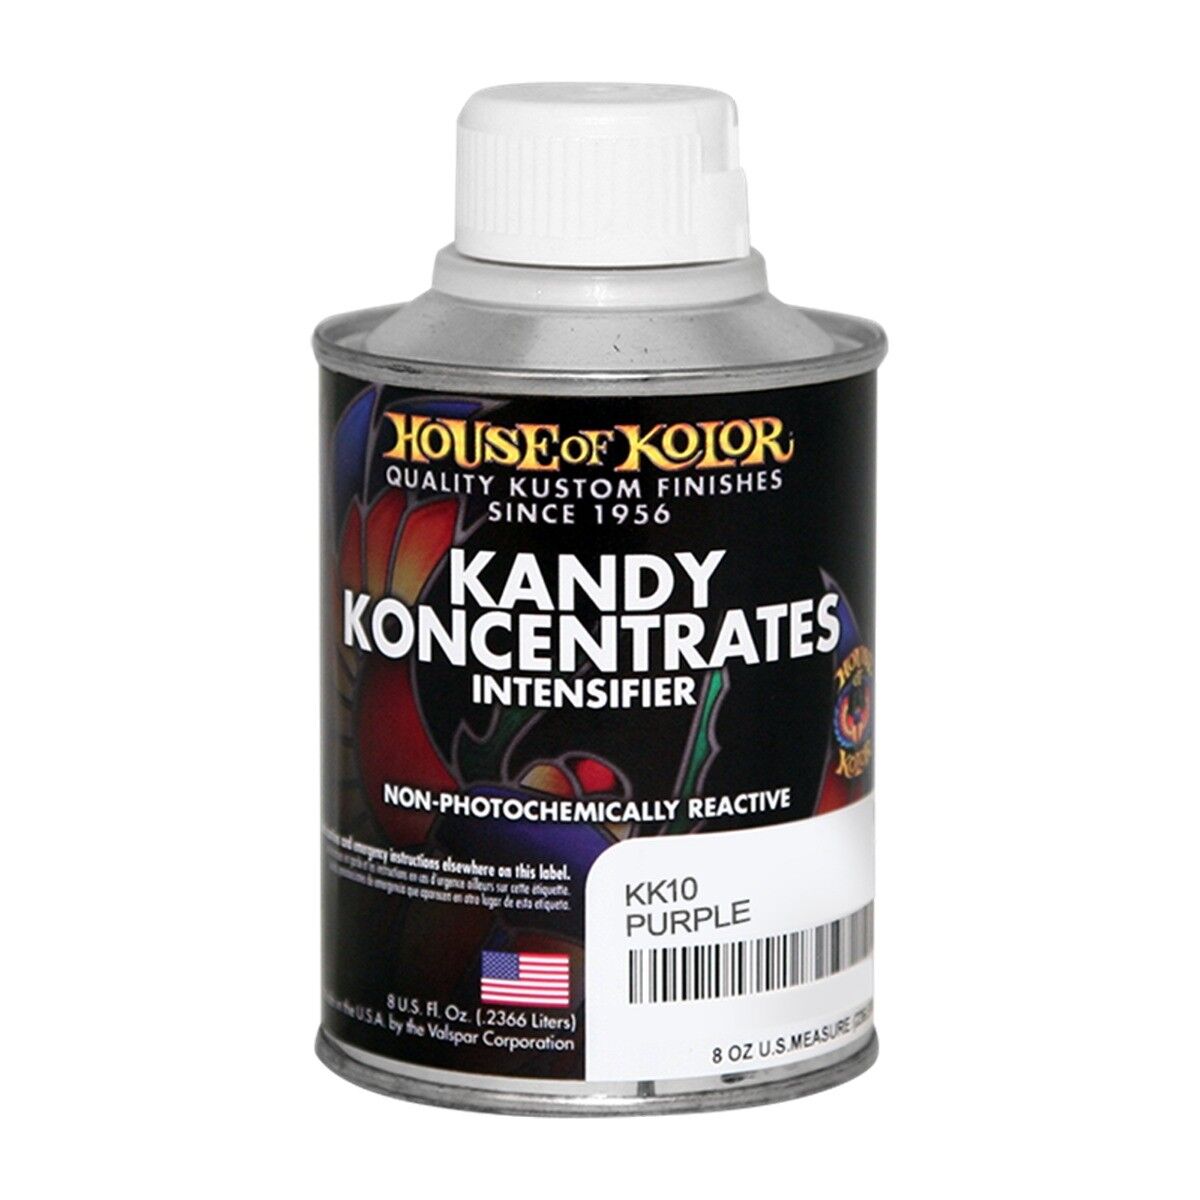 House of Kolor KK10-C02 Purple Kandy Koncentrate Paint Intensifier 1/2 Pint